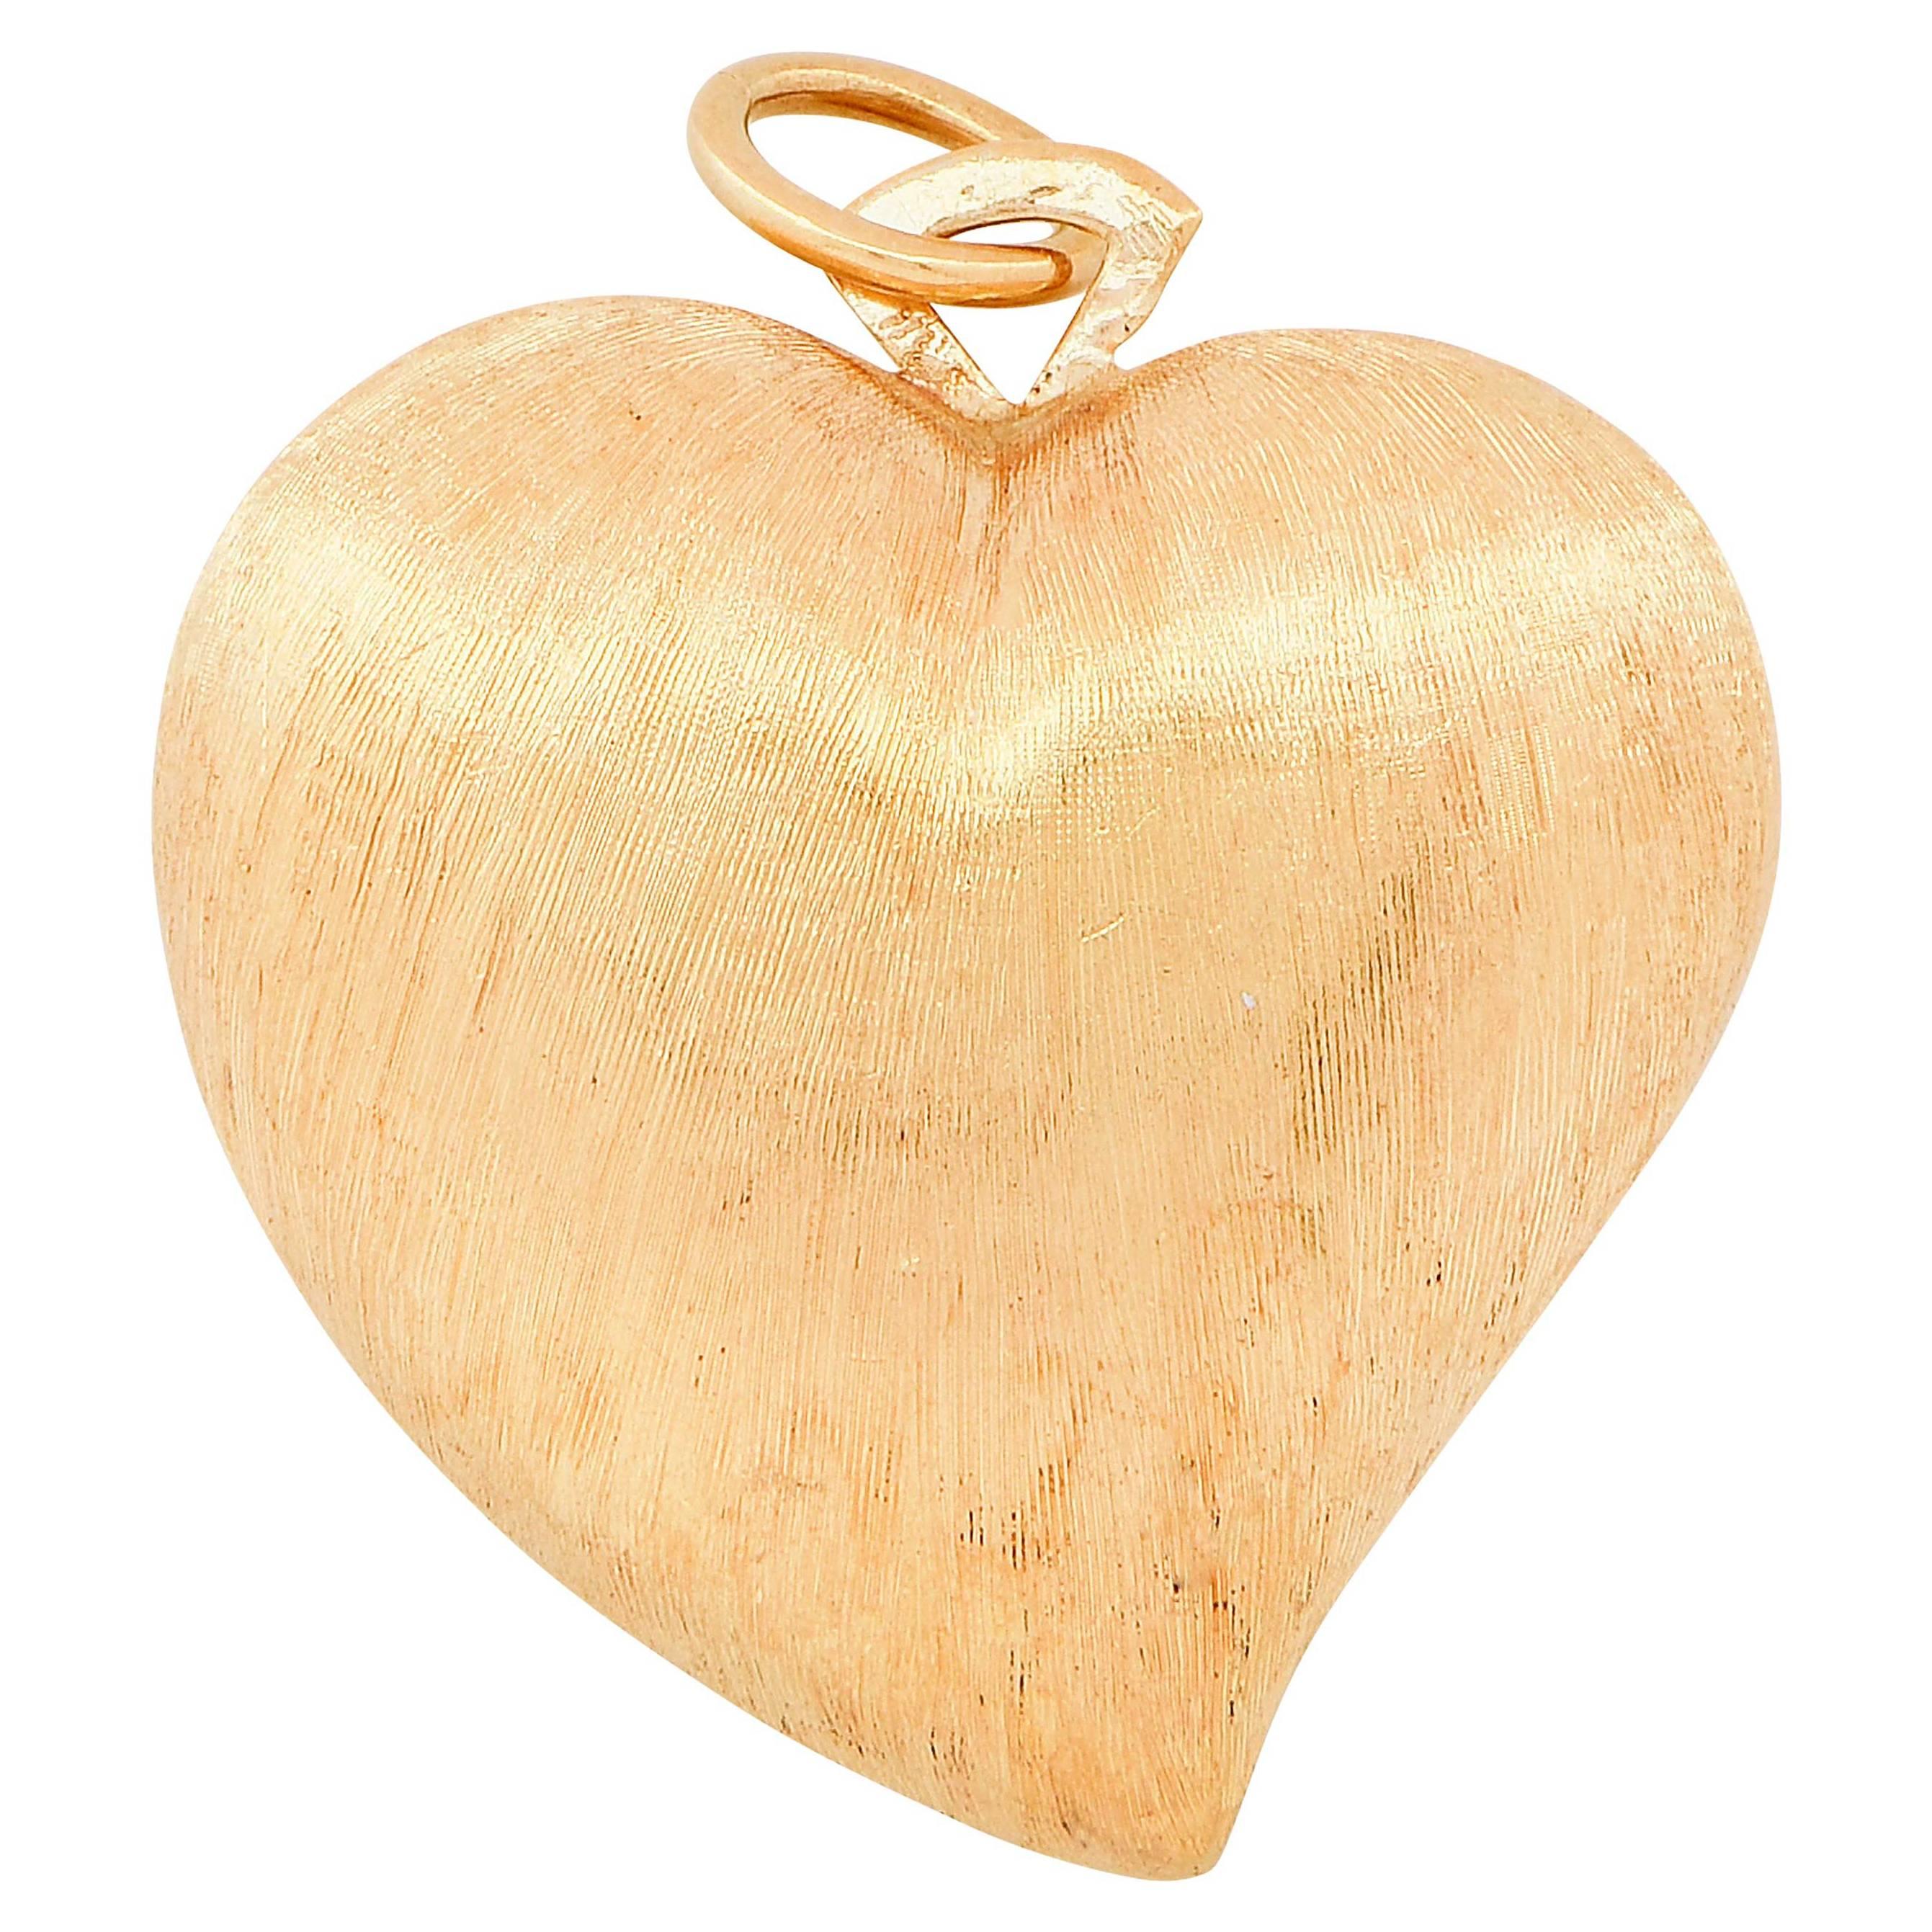 Brushed Yellow Gold Heart Shape Pendant